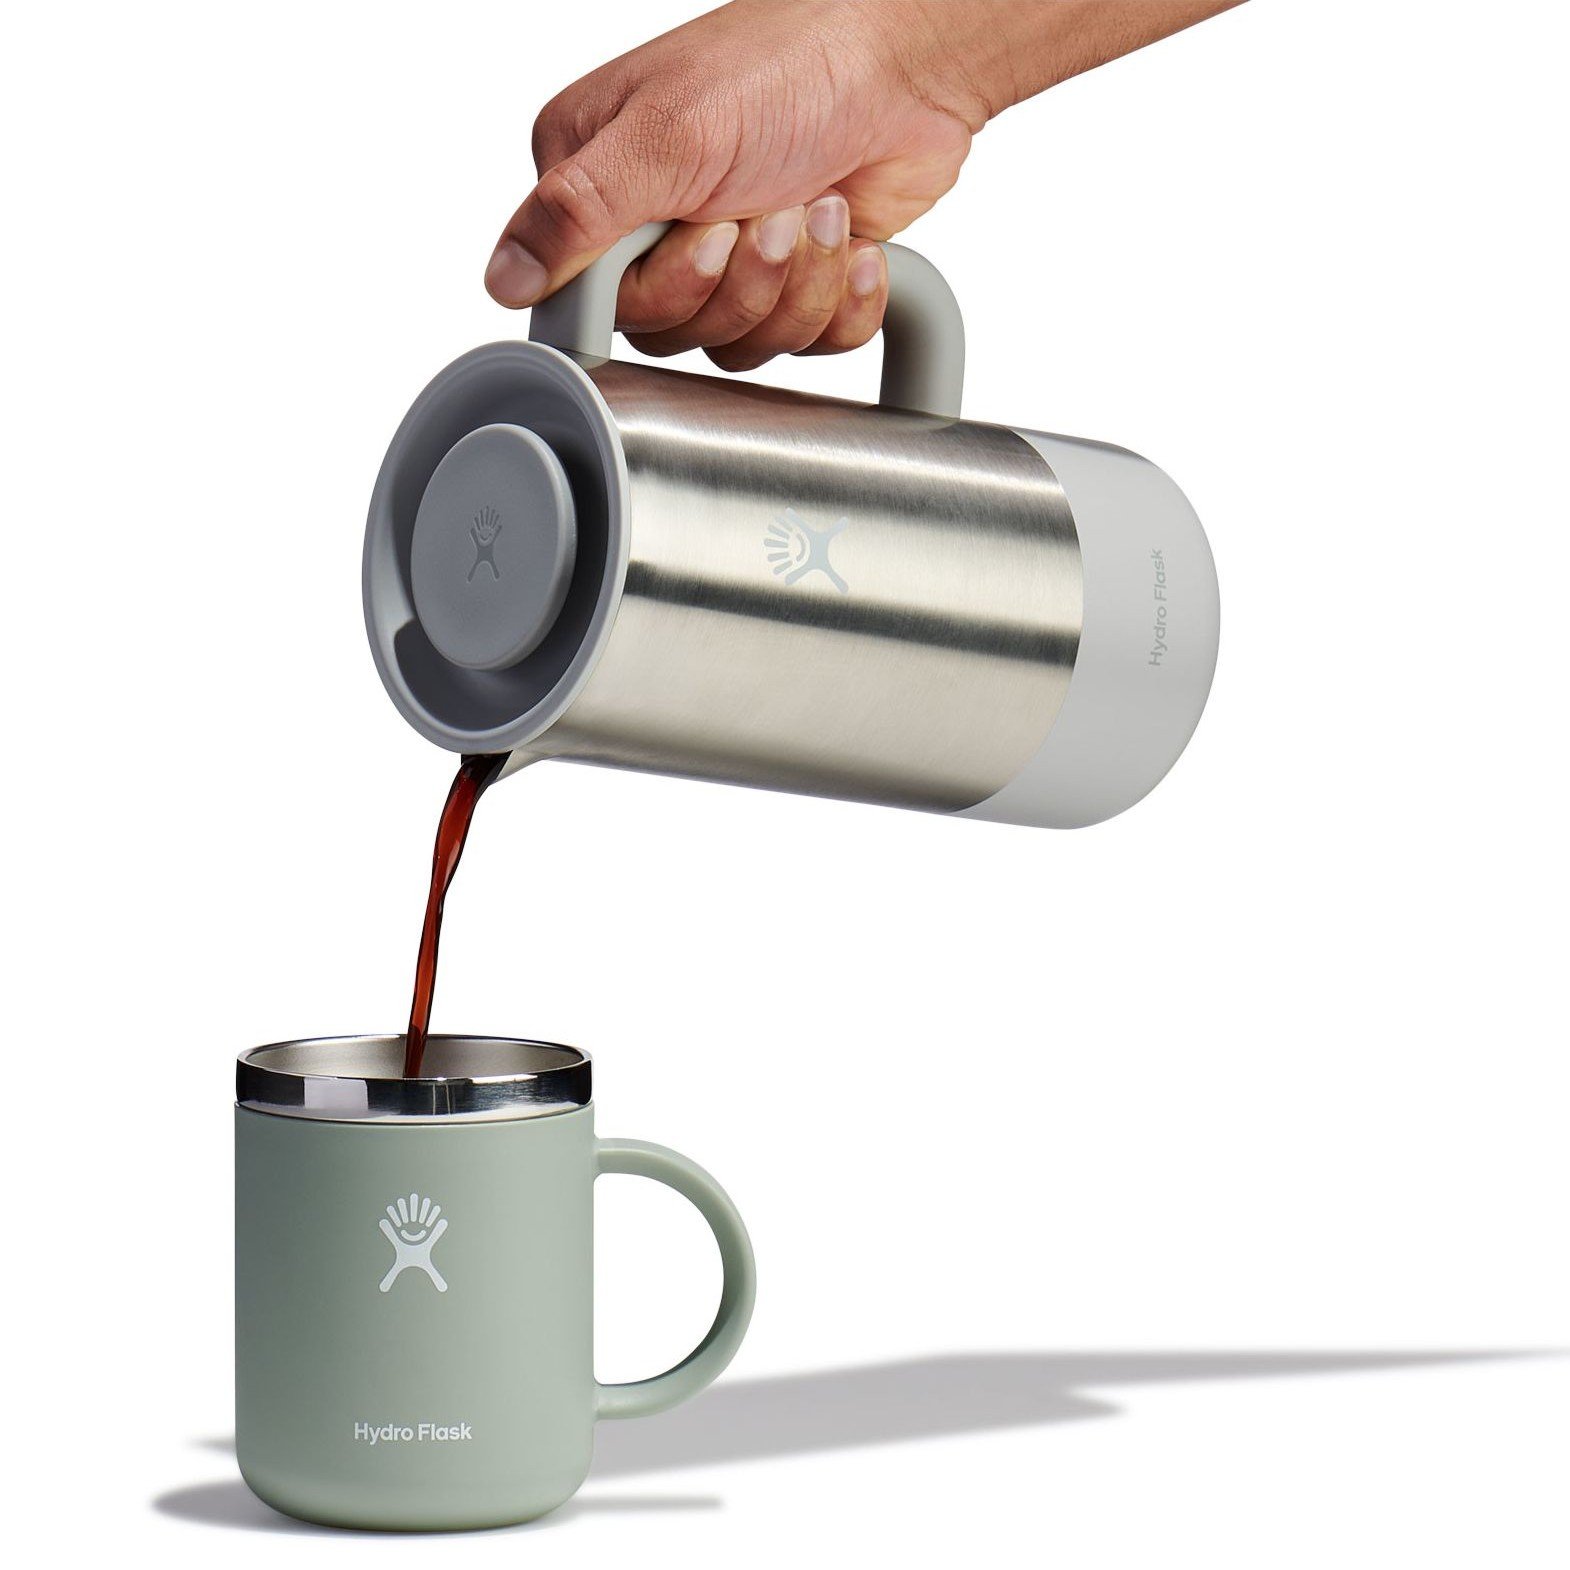 Hydro Flask French Press Coffee Maker